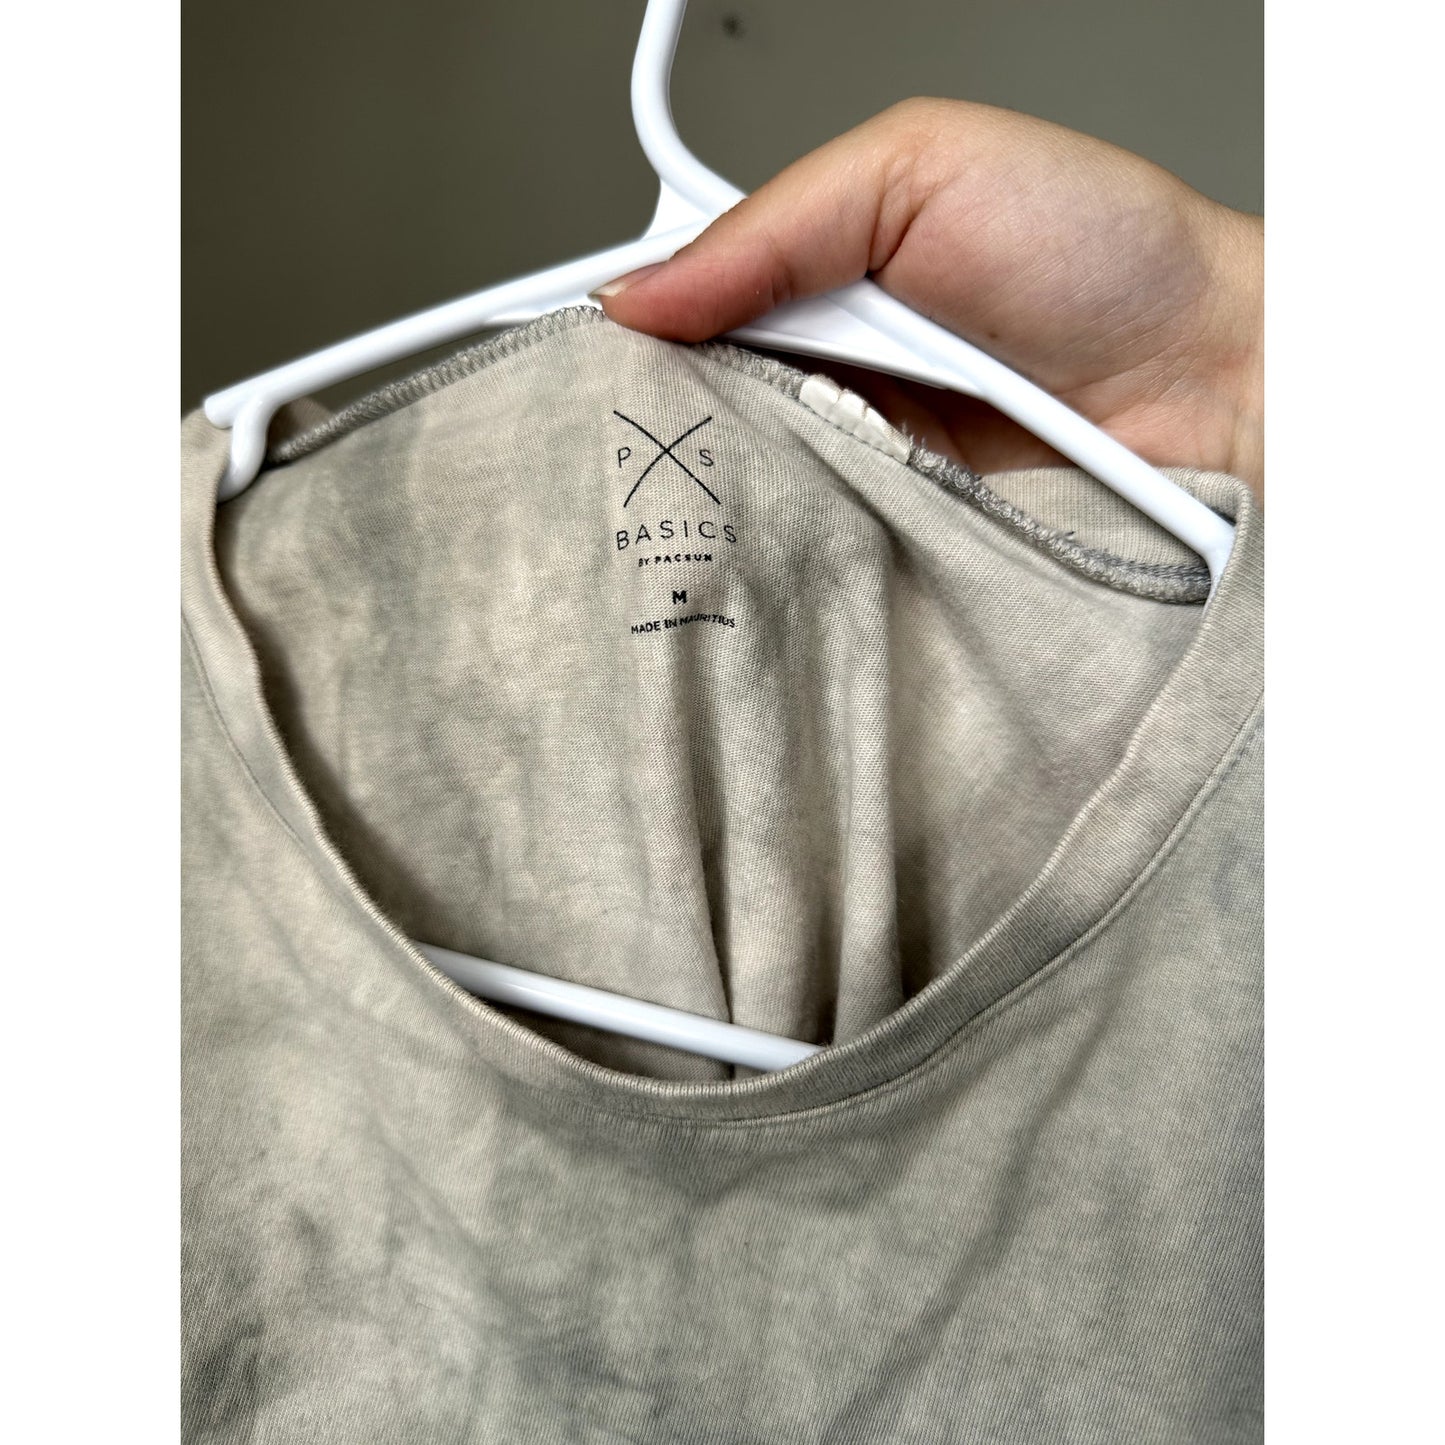 PacSun Basics Short Sleeve Shirt, Size M